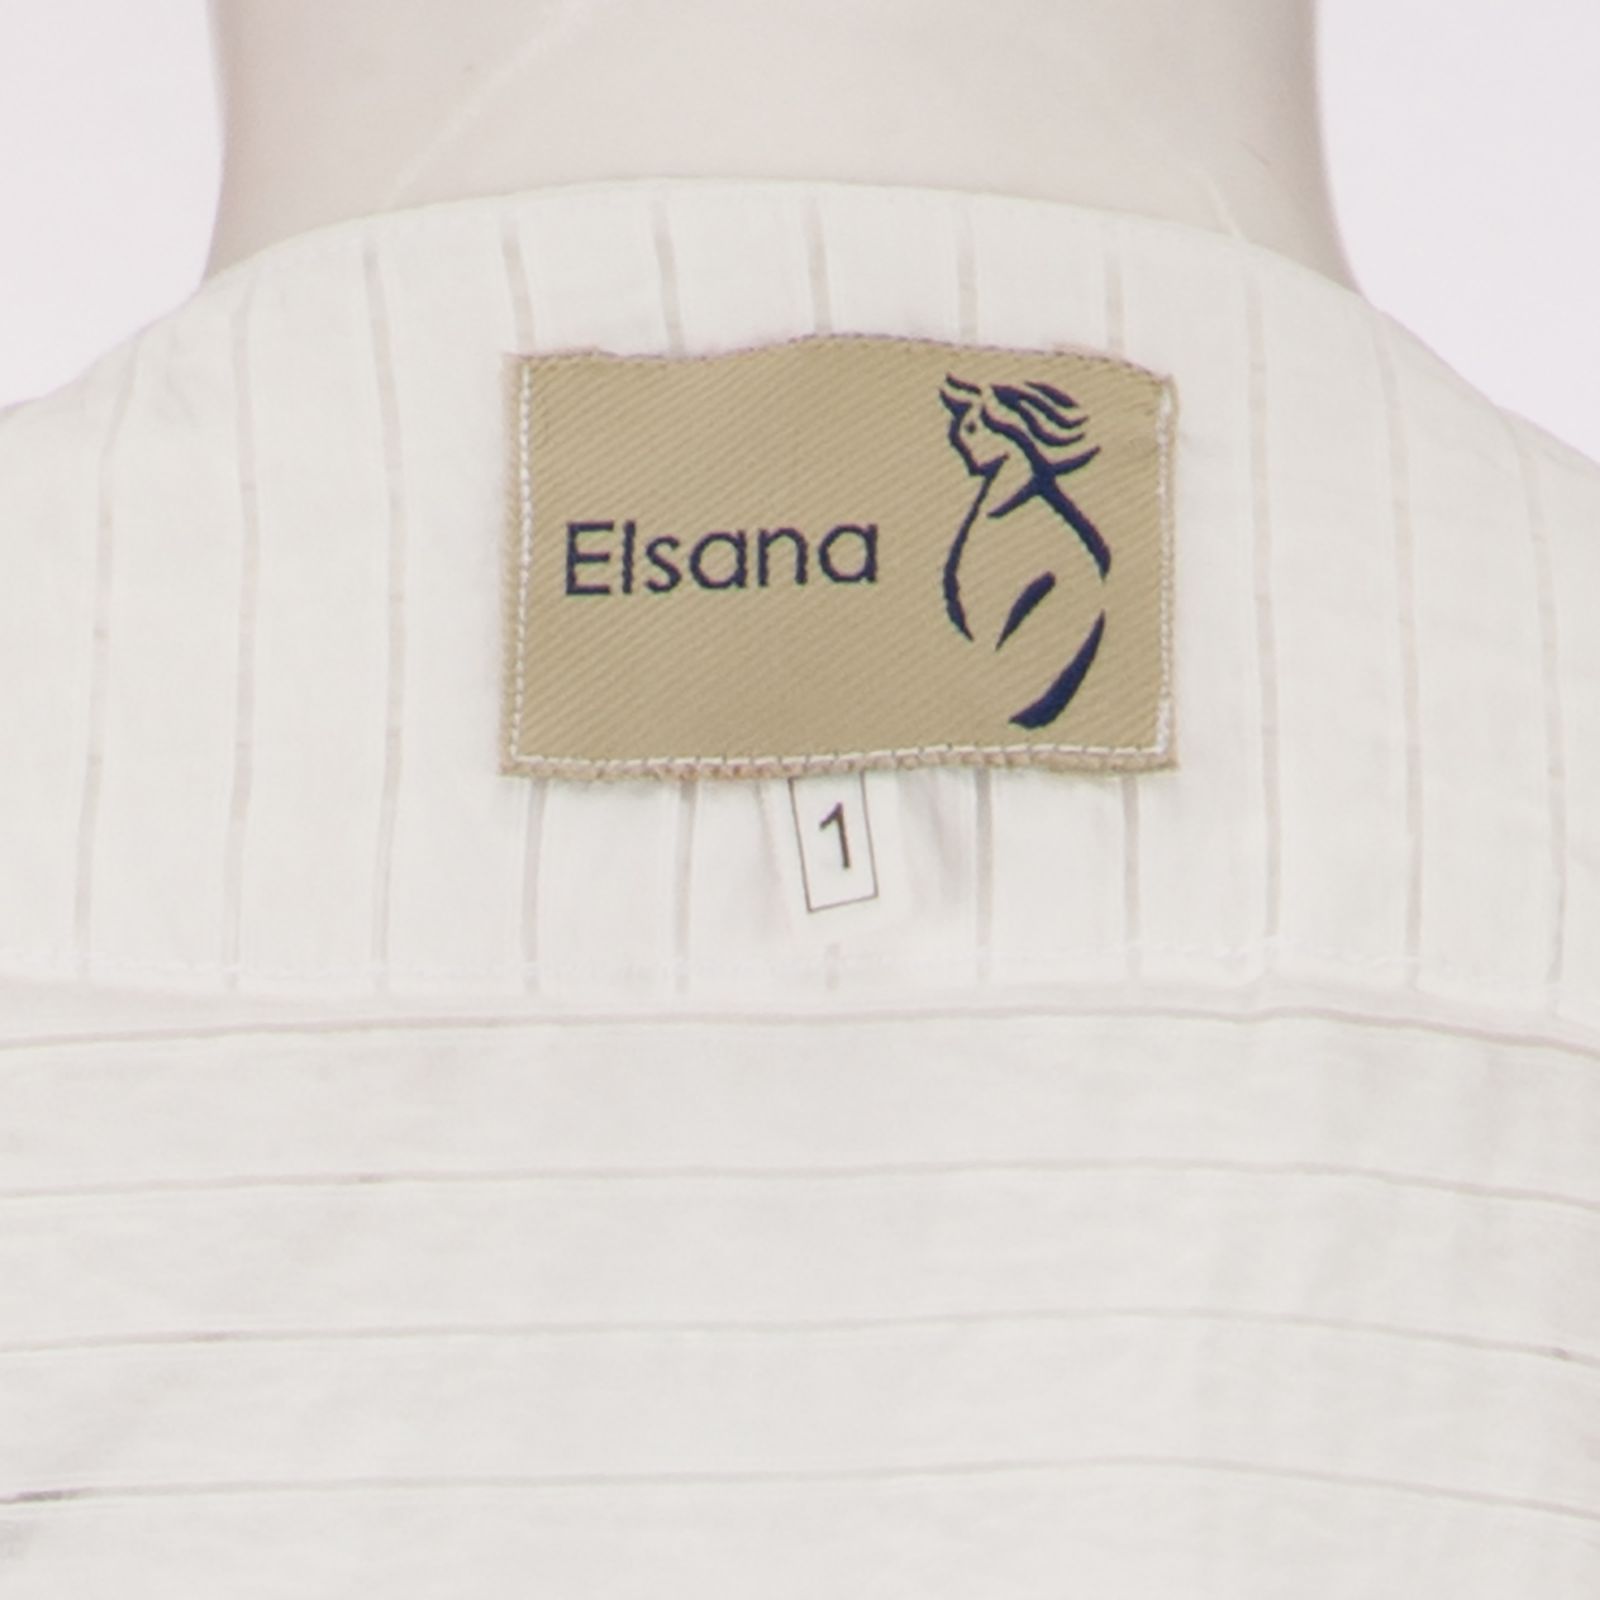 ست 3 تکه لباس زنانه السانا مدل روژیار کد 82841 -  - 11